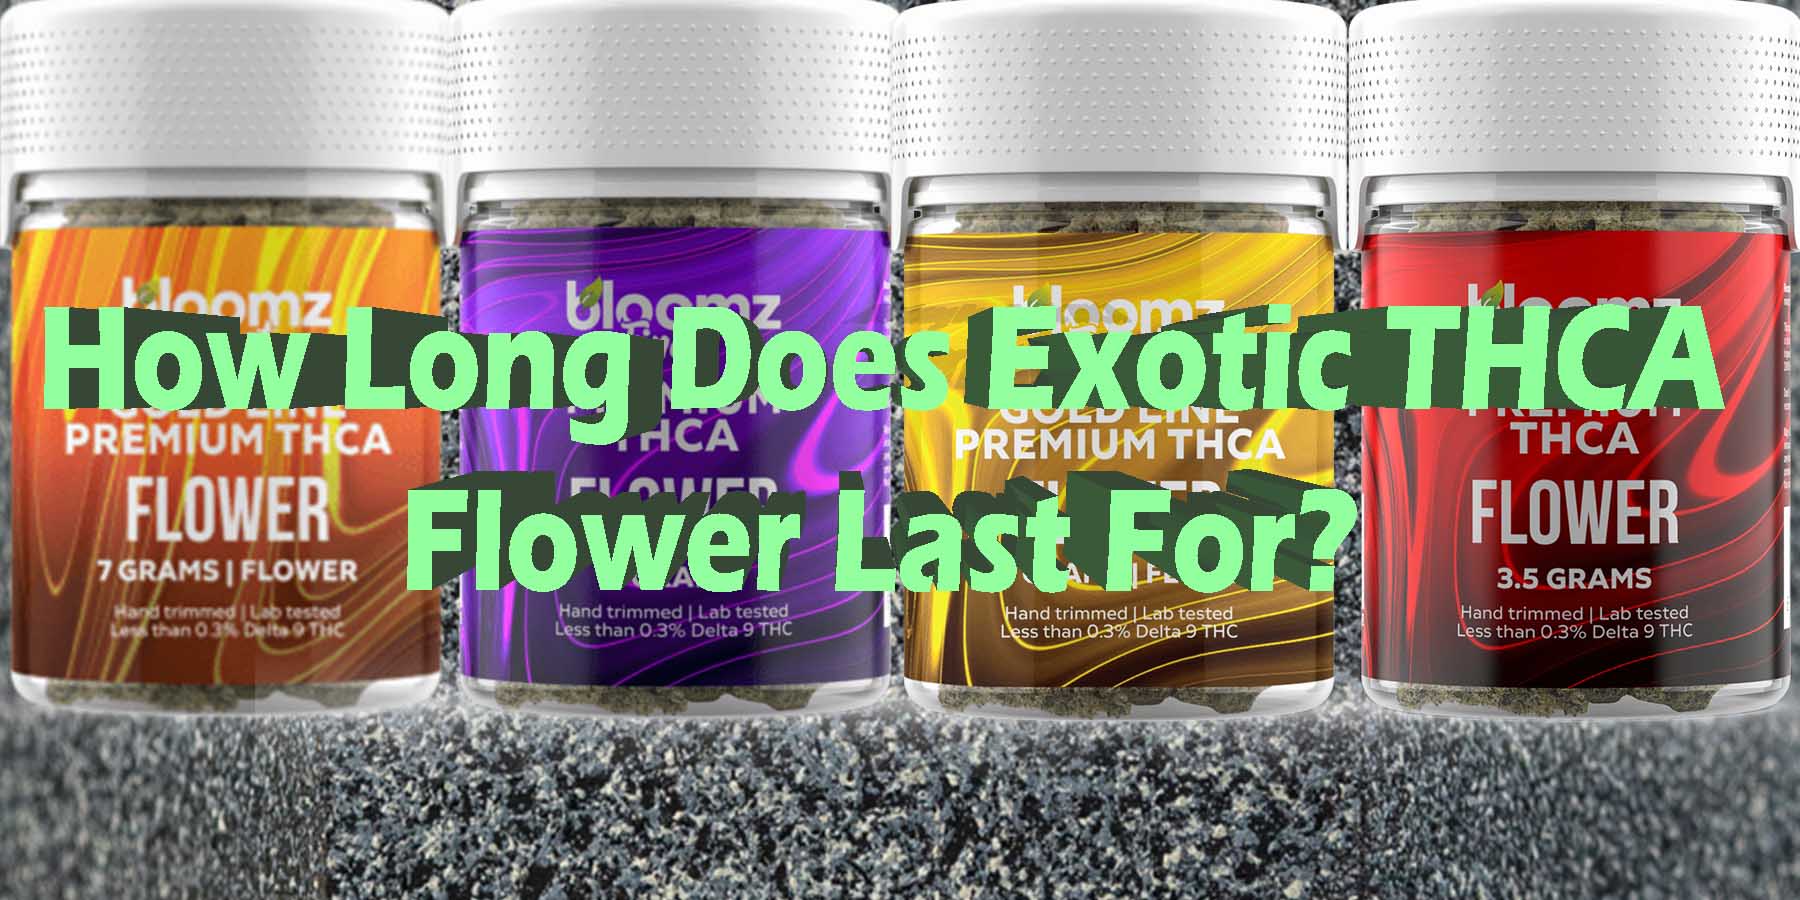 How Long Does Exotic THCA Flower Last For BestBrand GoodPrice GetNearMe LowestCoupon DiscountStore Shoponline VapeCarts Online StrongestSmoke ShopBinoid